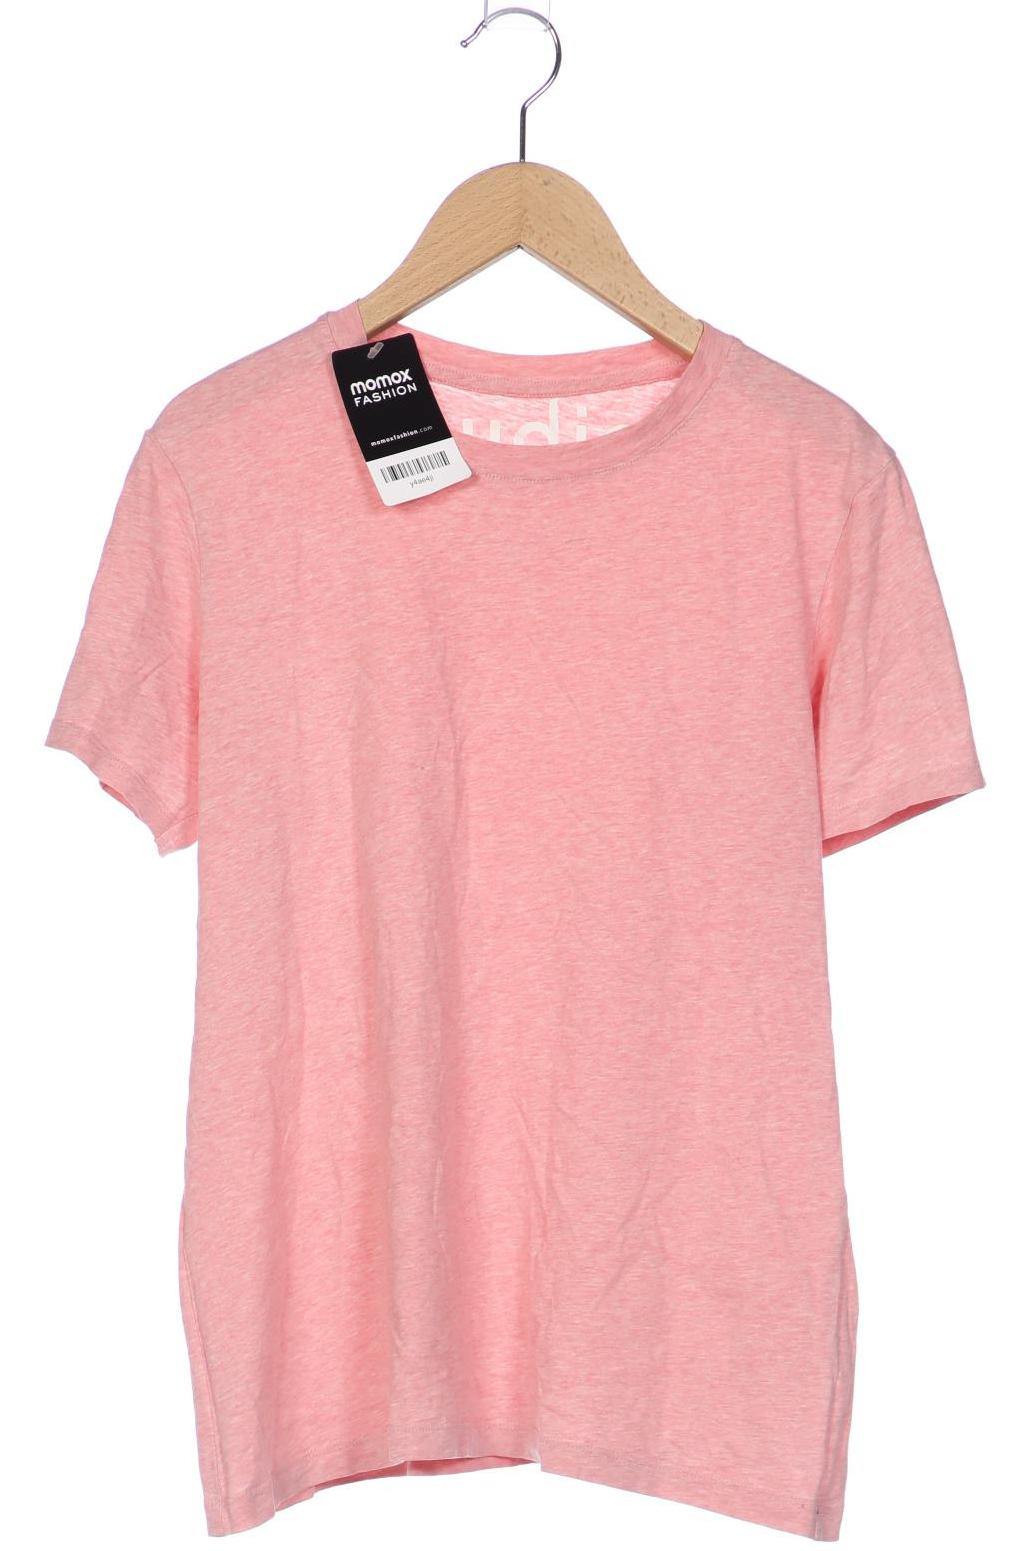 Acne Studios Herren T-Shirt, pink von Acne Studios